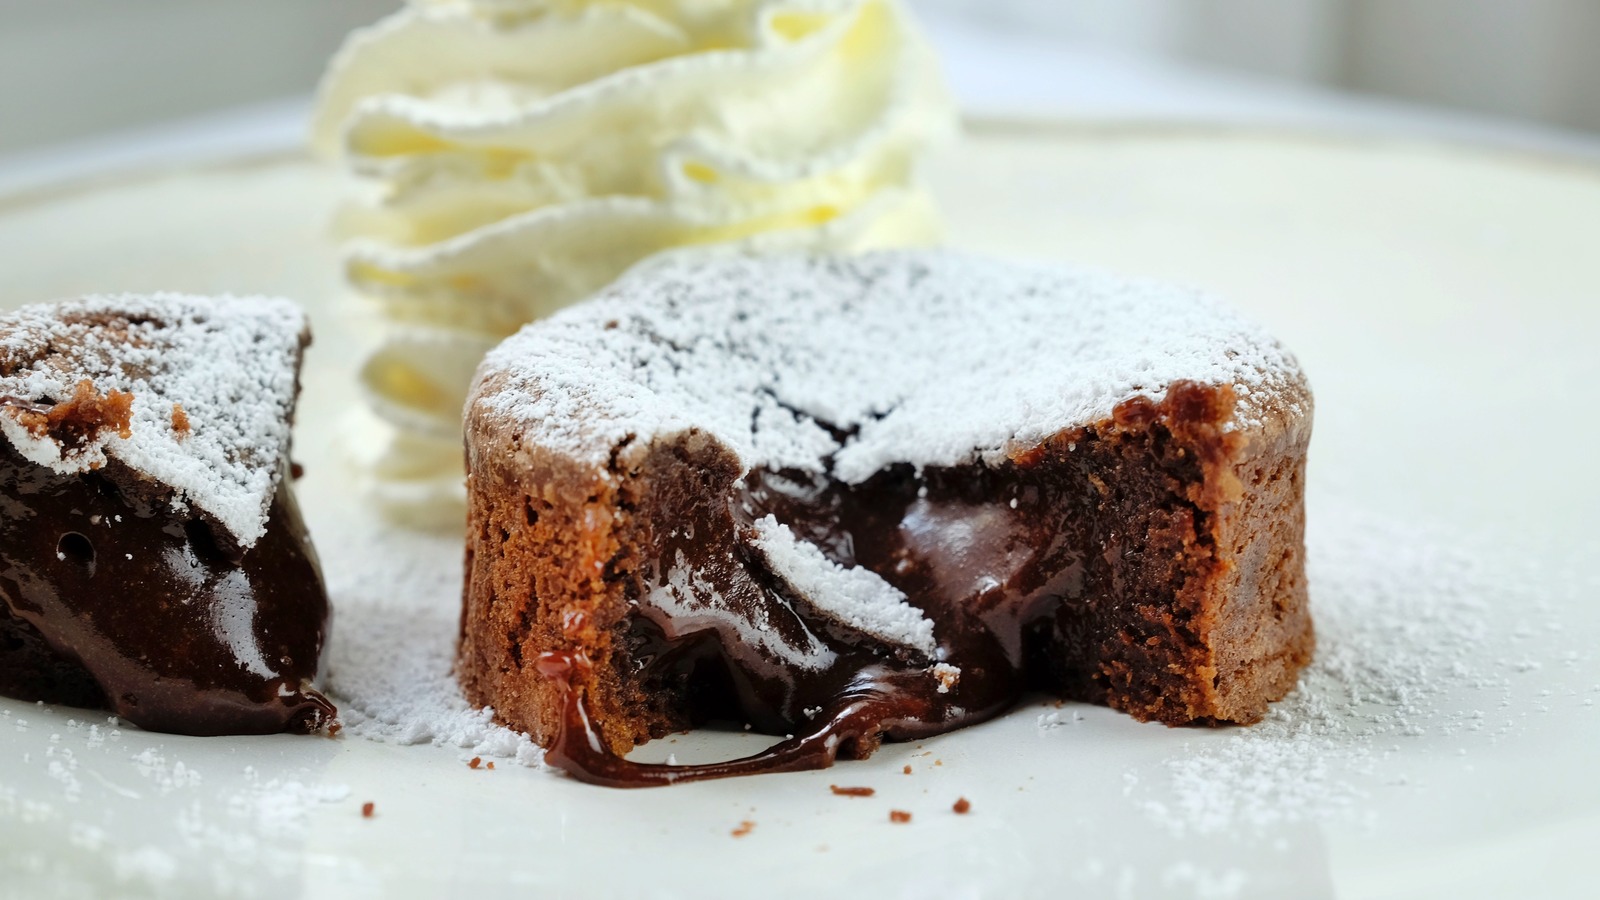 Chocolate lava crunch cake dominos calories